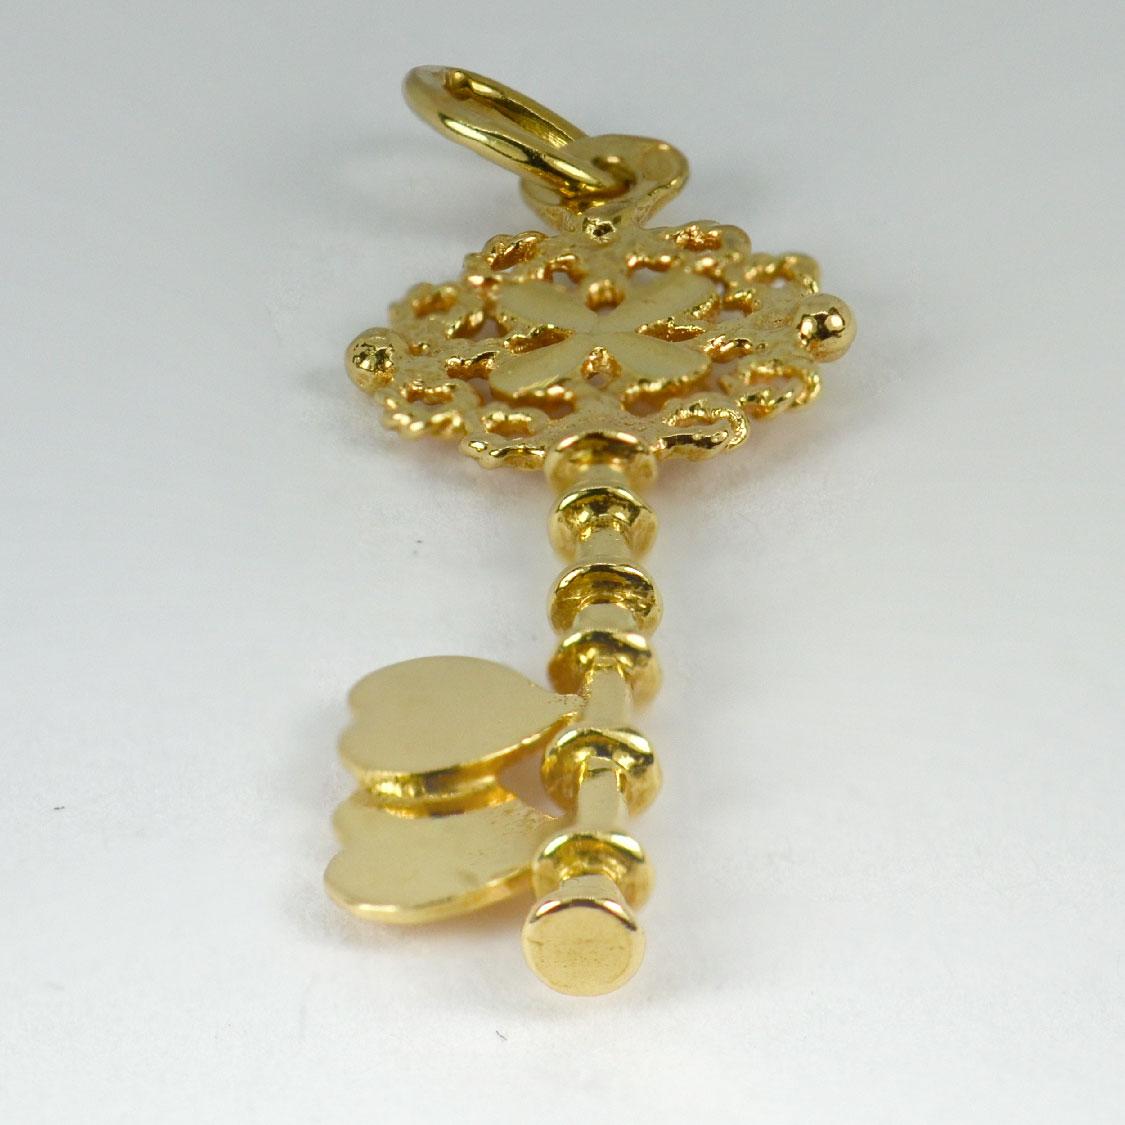 solid gold key pendant